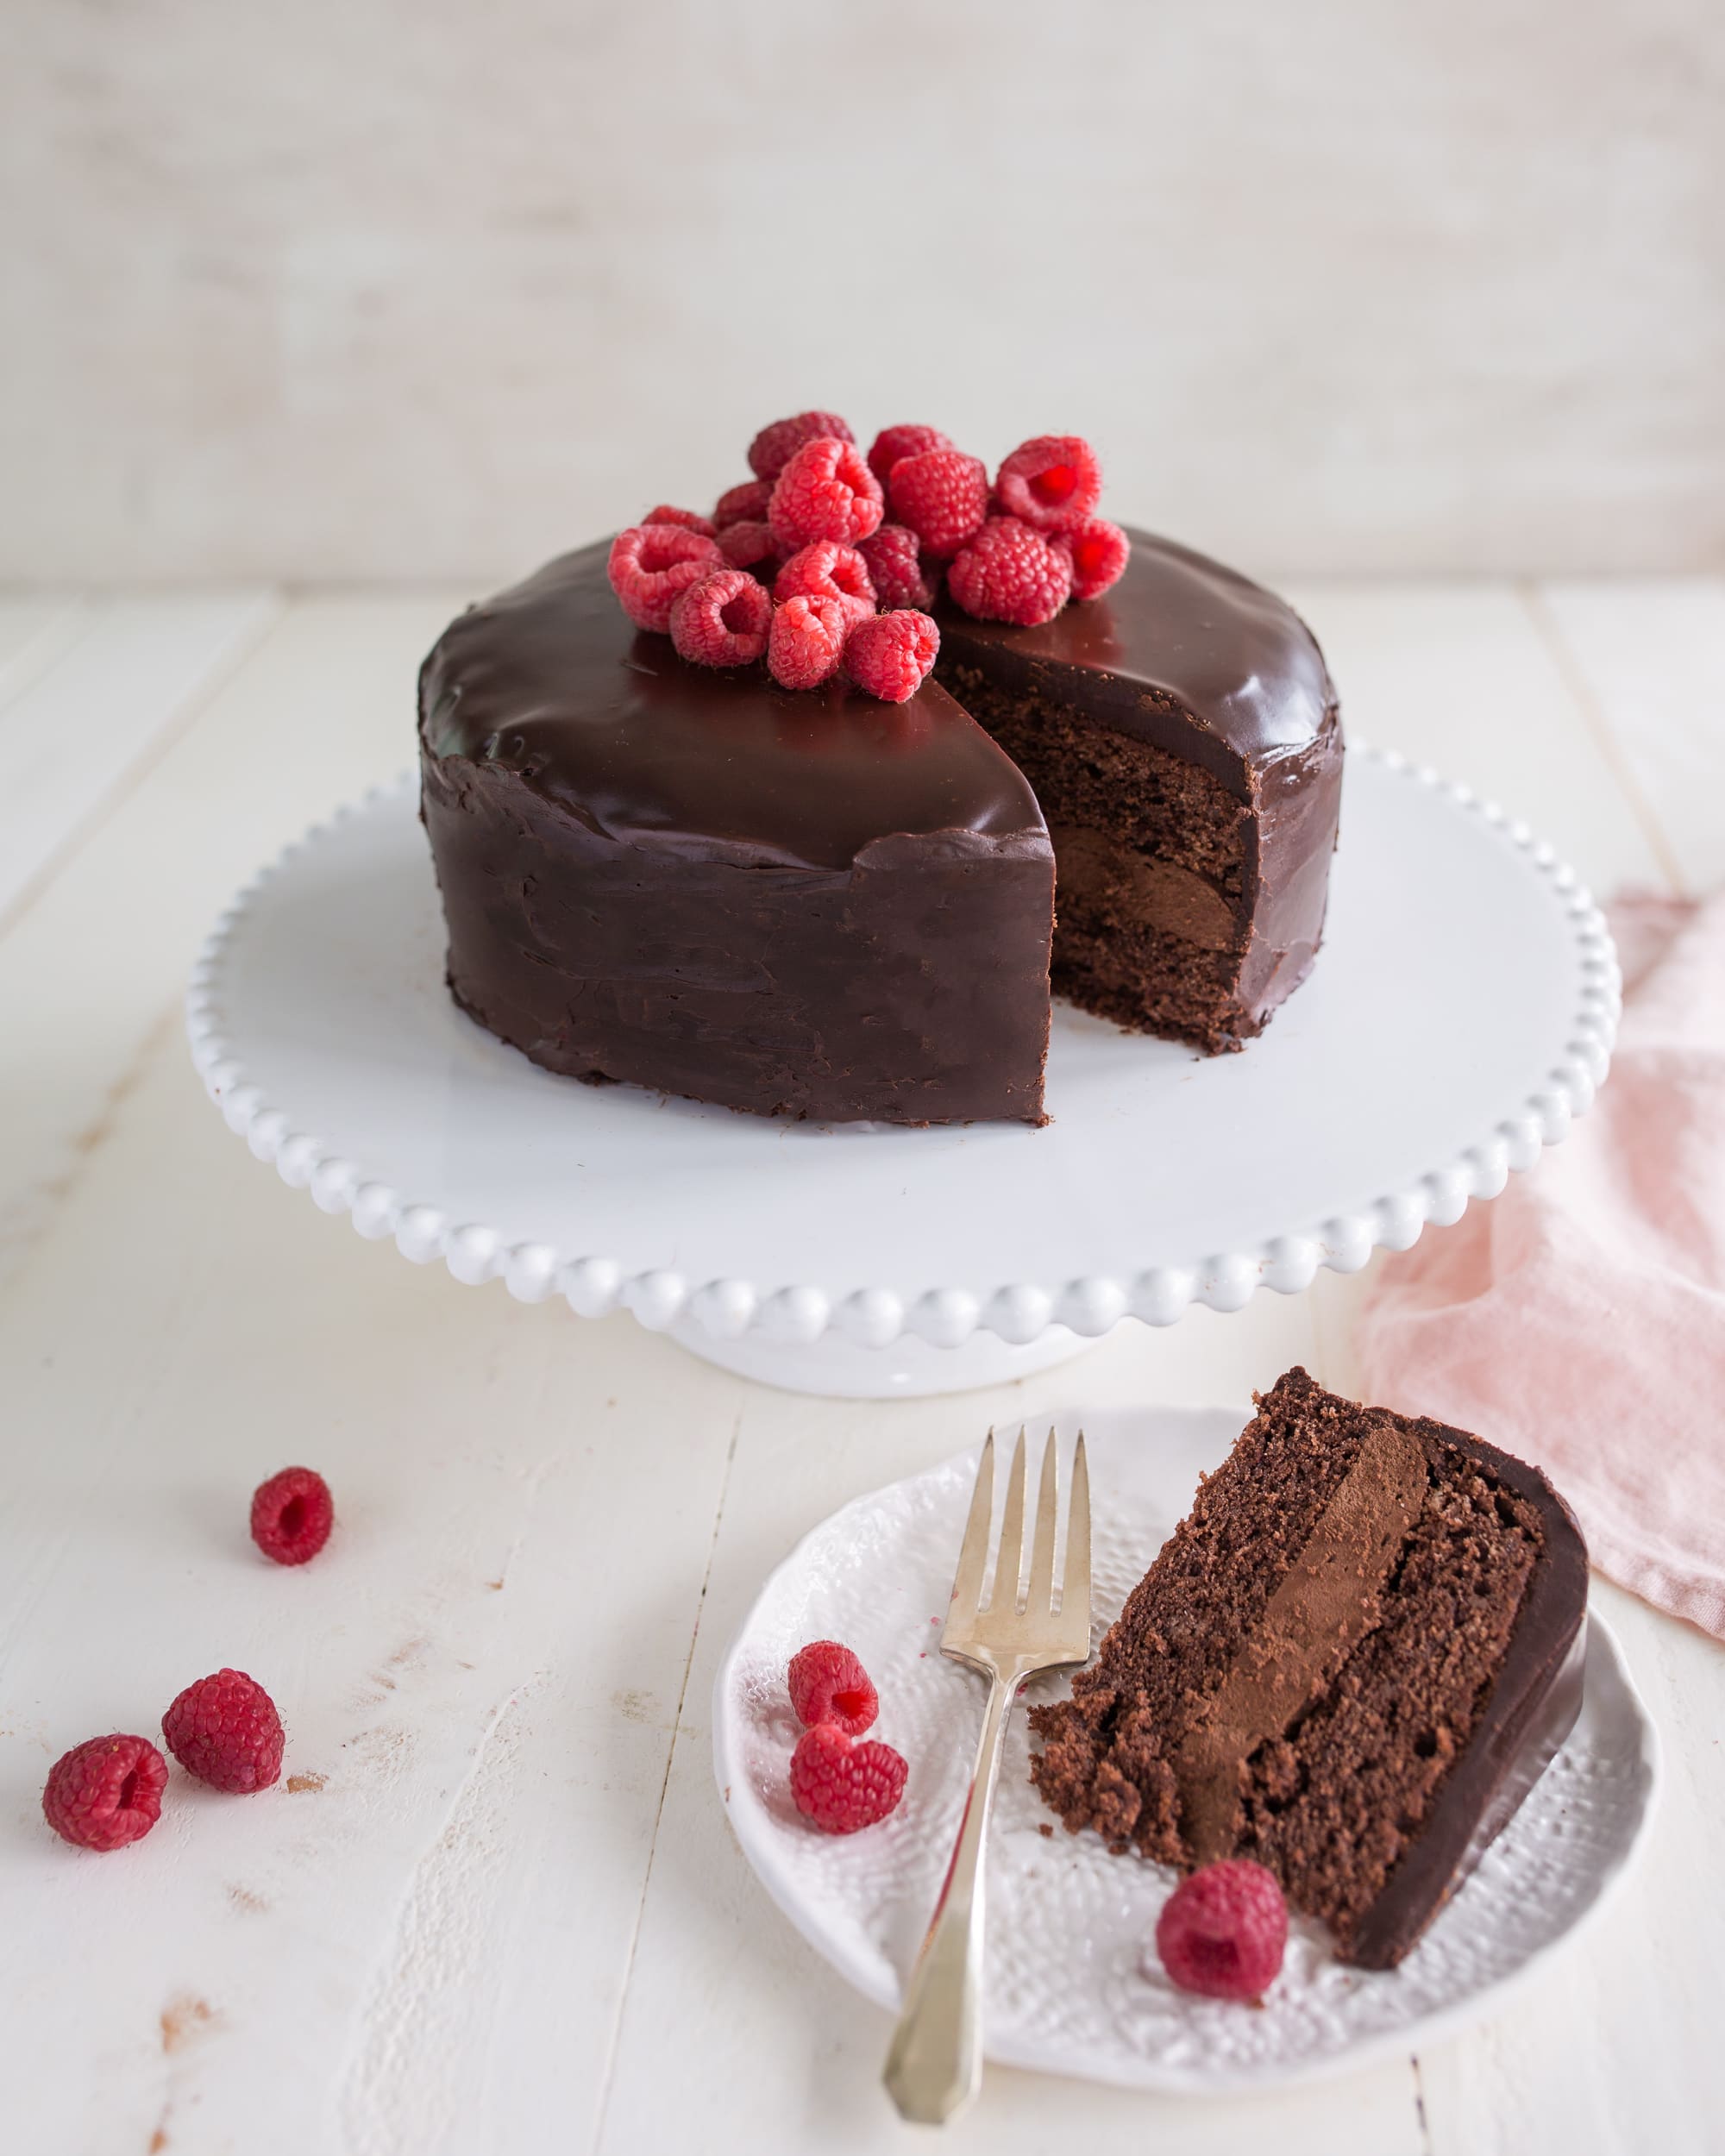 Sponge Cake Genoise Chocolat Recipe - The Delectable Hodgepodge